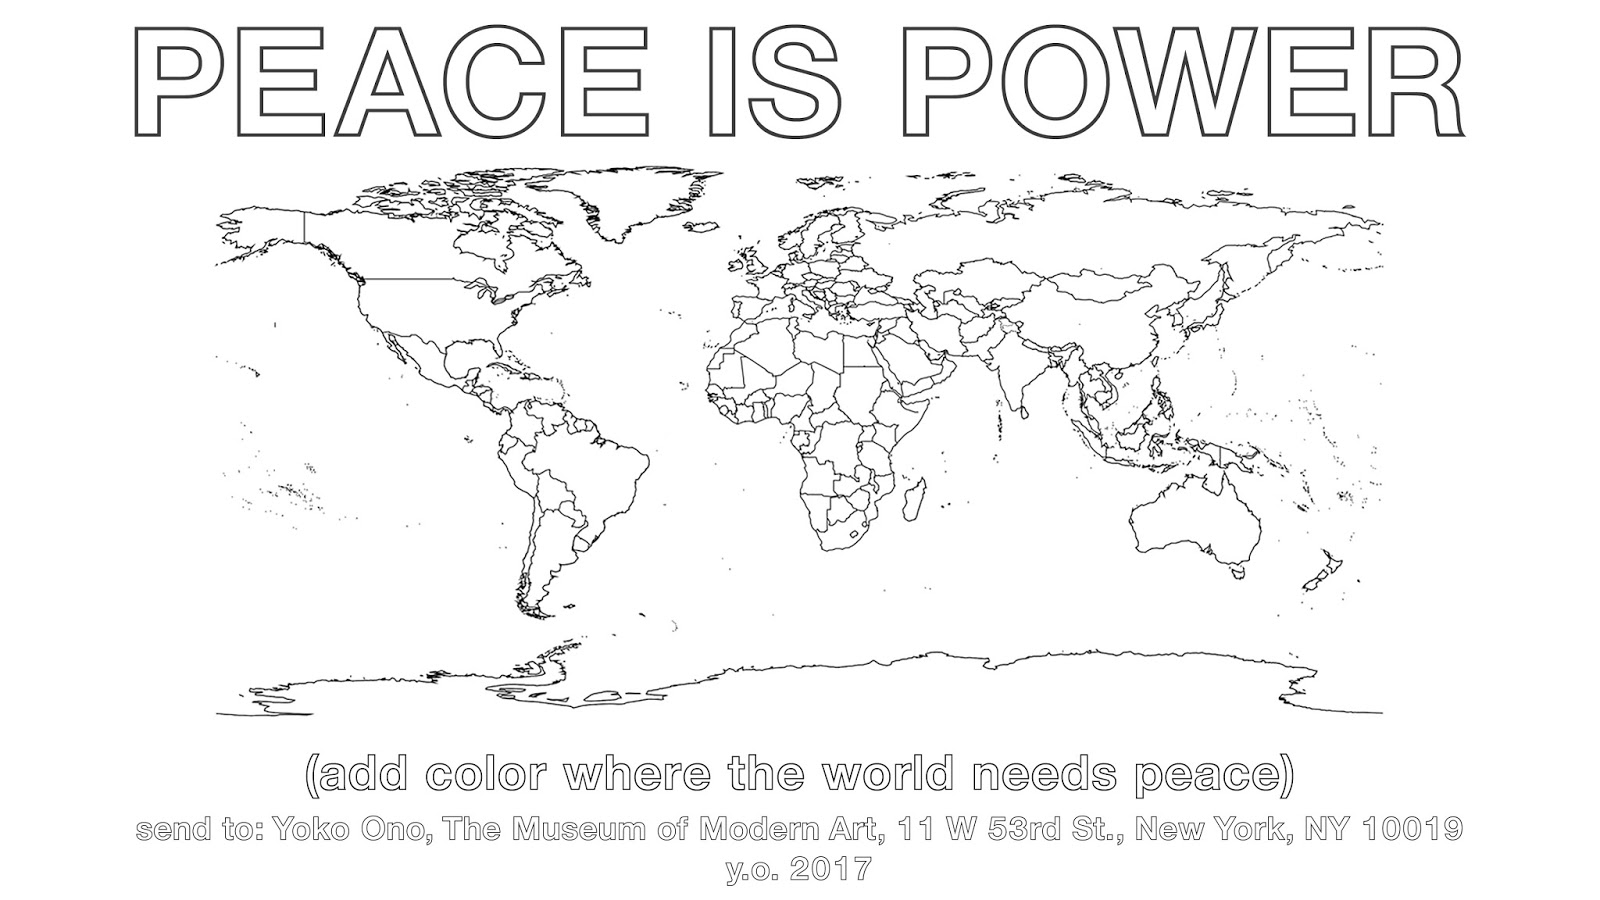 Карта Йоко. Yoko Ono imagine Peace. Peace to Power. Йоко оно Peace is Power. Color where are you